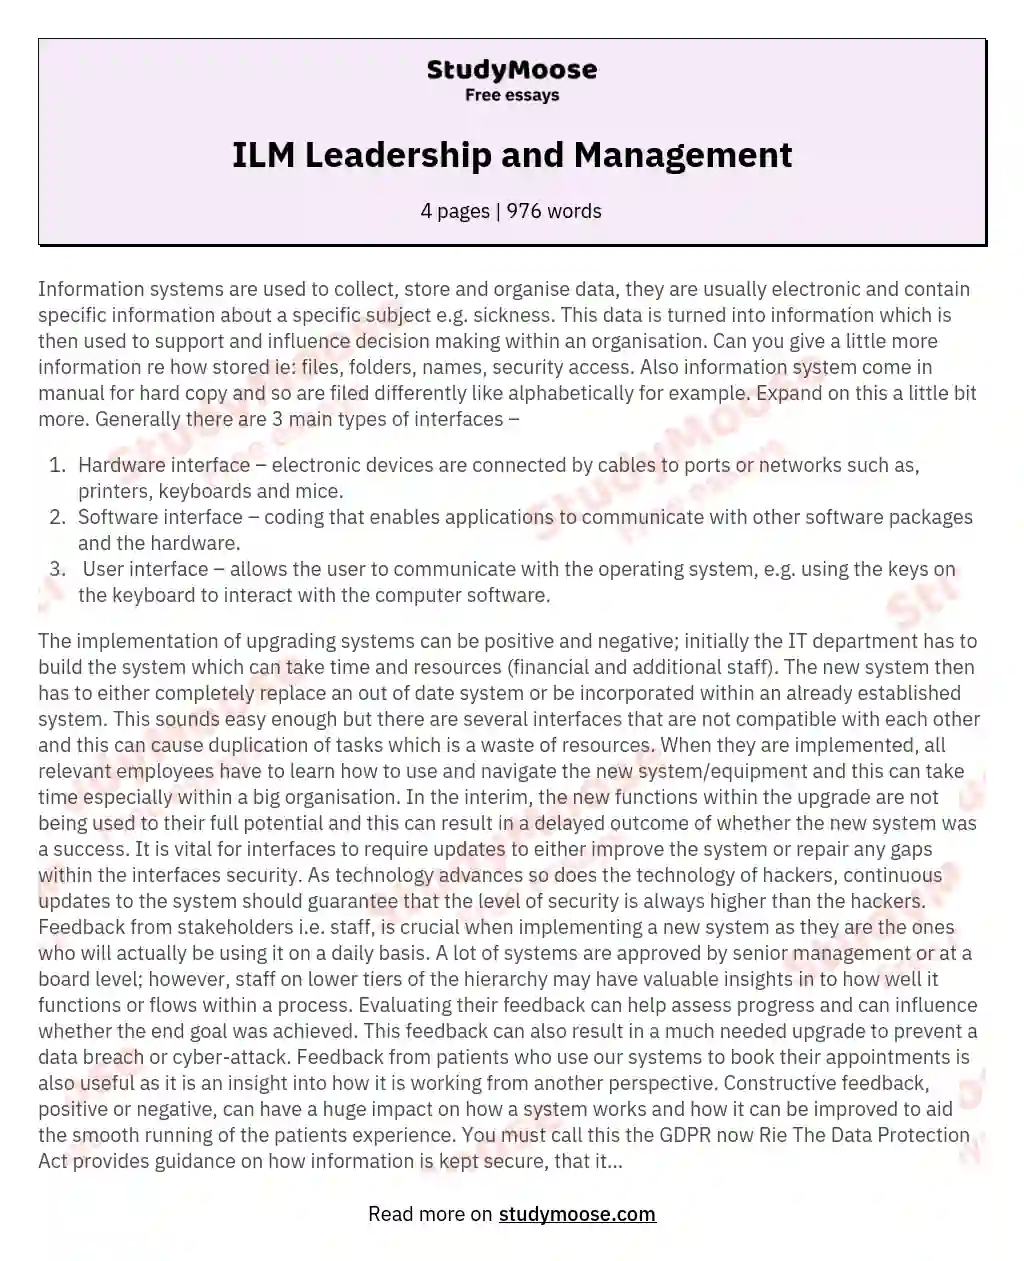 ILM Leadership and Management essay